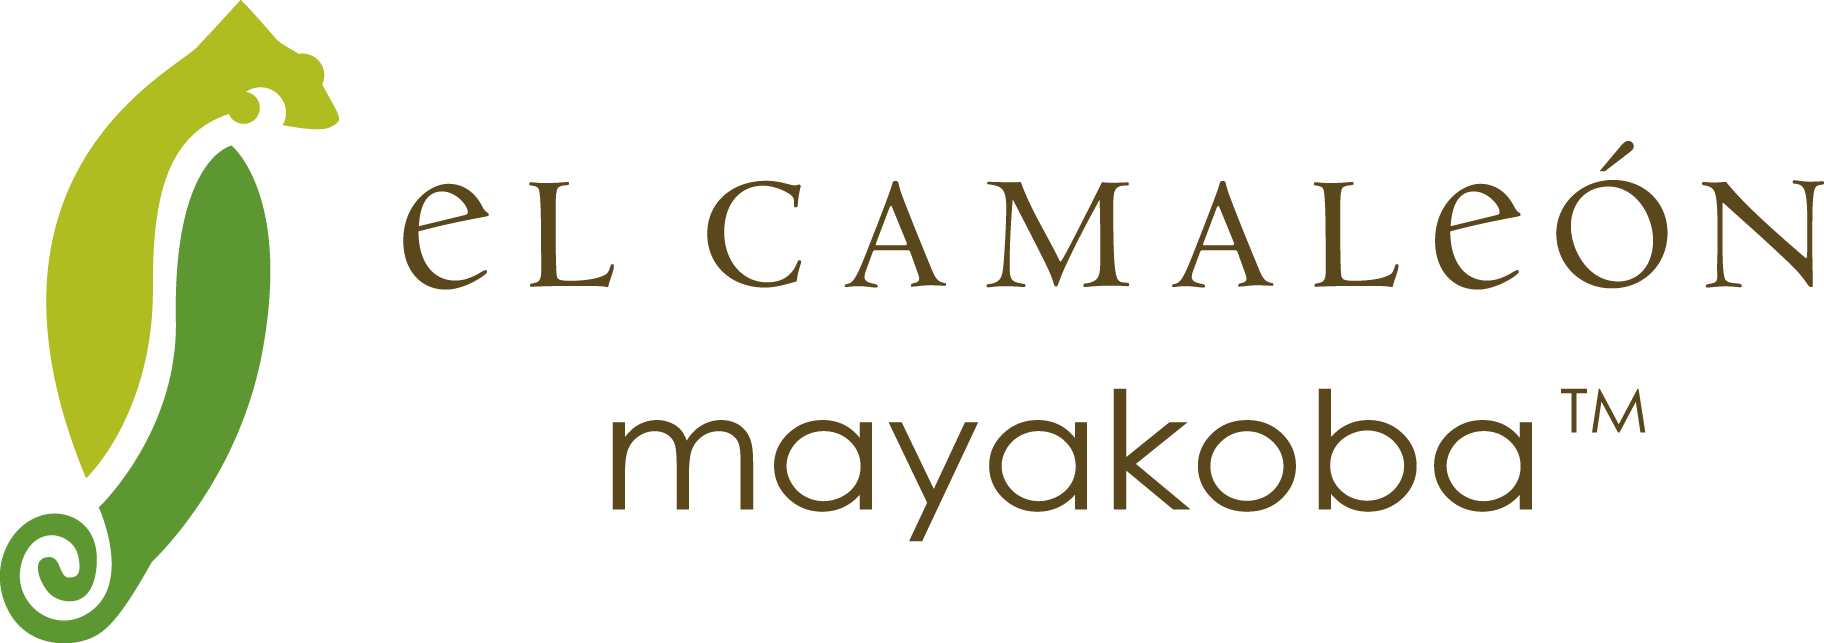 El Camaleón Mayakoba Logo